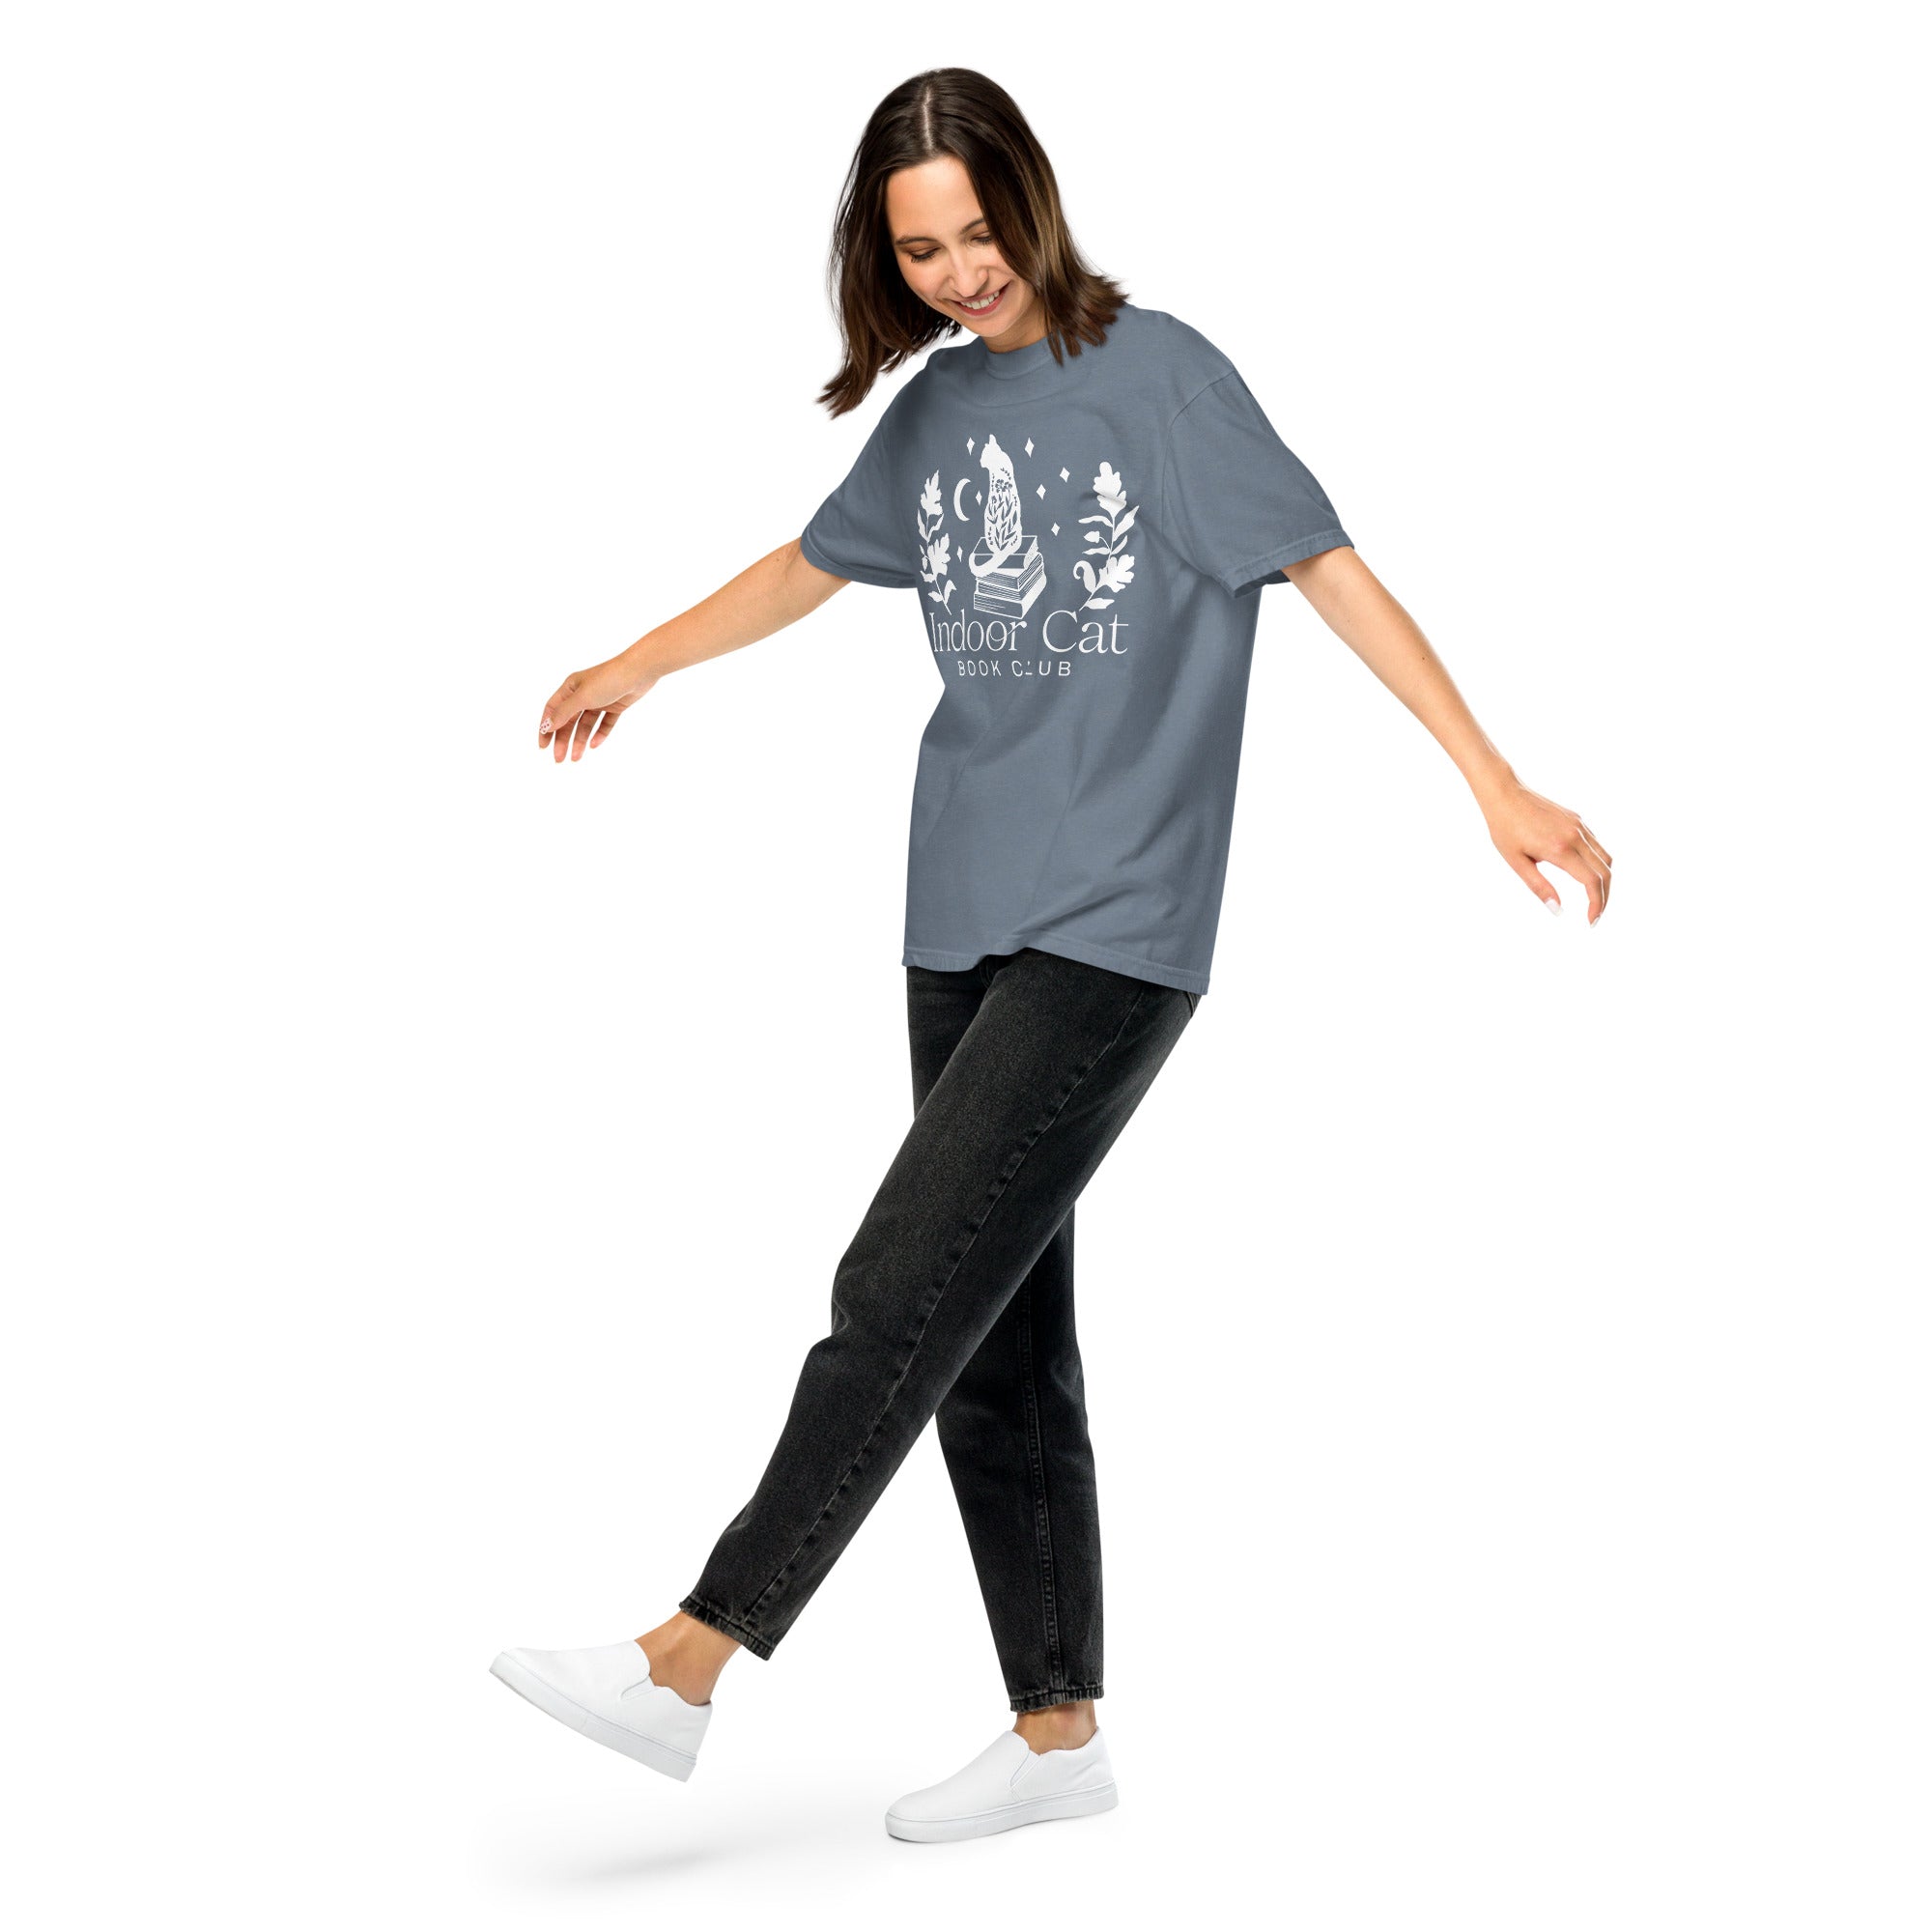 FireDrake Artistry™ Indoor Cat t-shirt, comfort colors brand in blue jean, white design